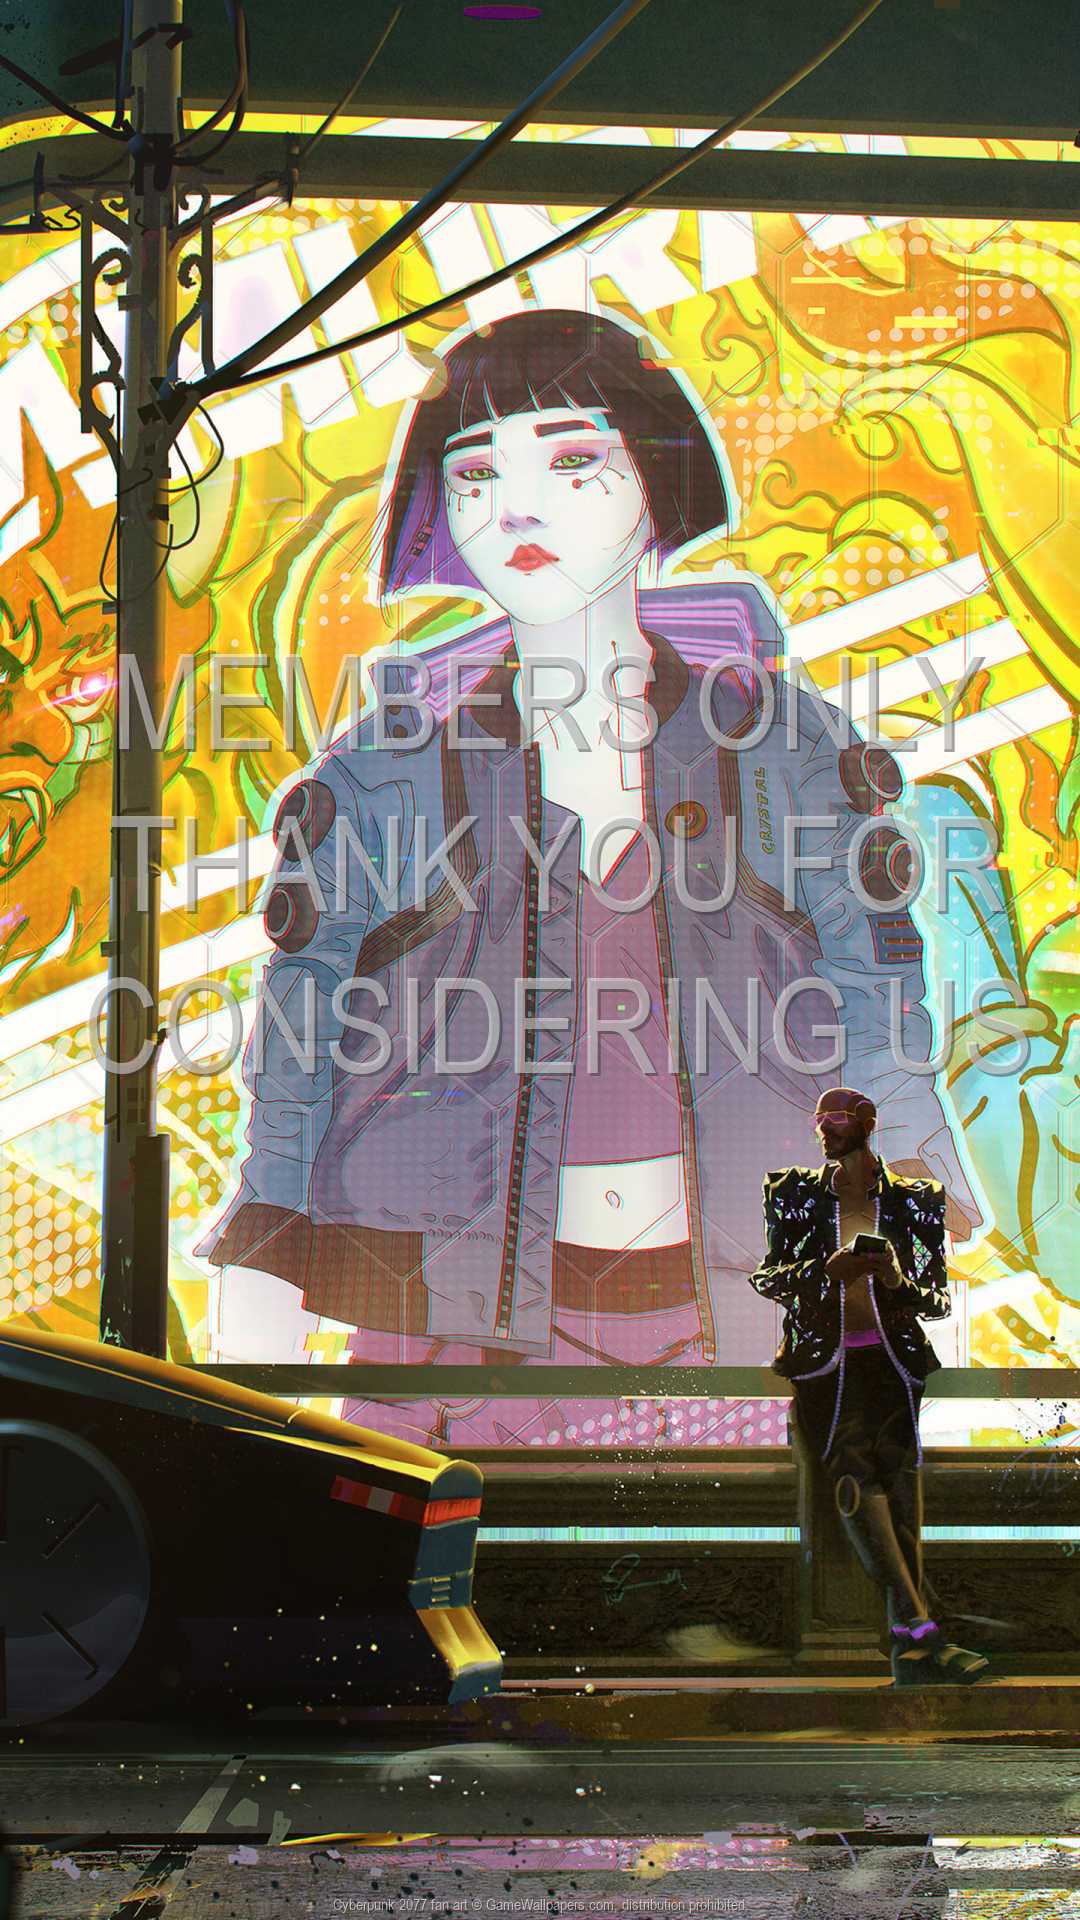 Cyberpunk 2077 fan art 1080p%20Vertical Mobile wallpaper or background 05